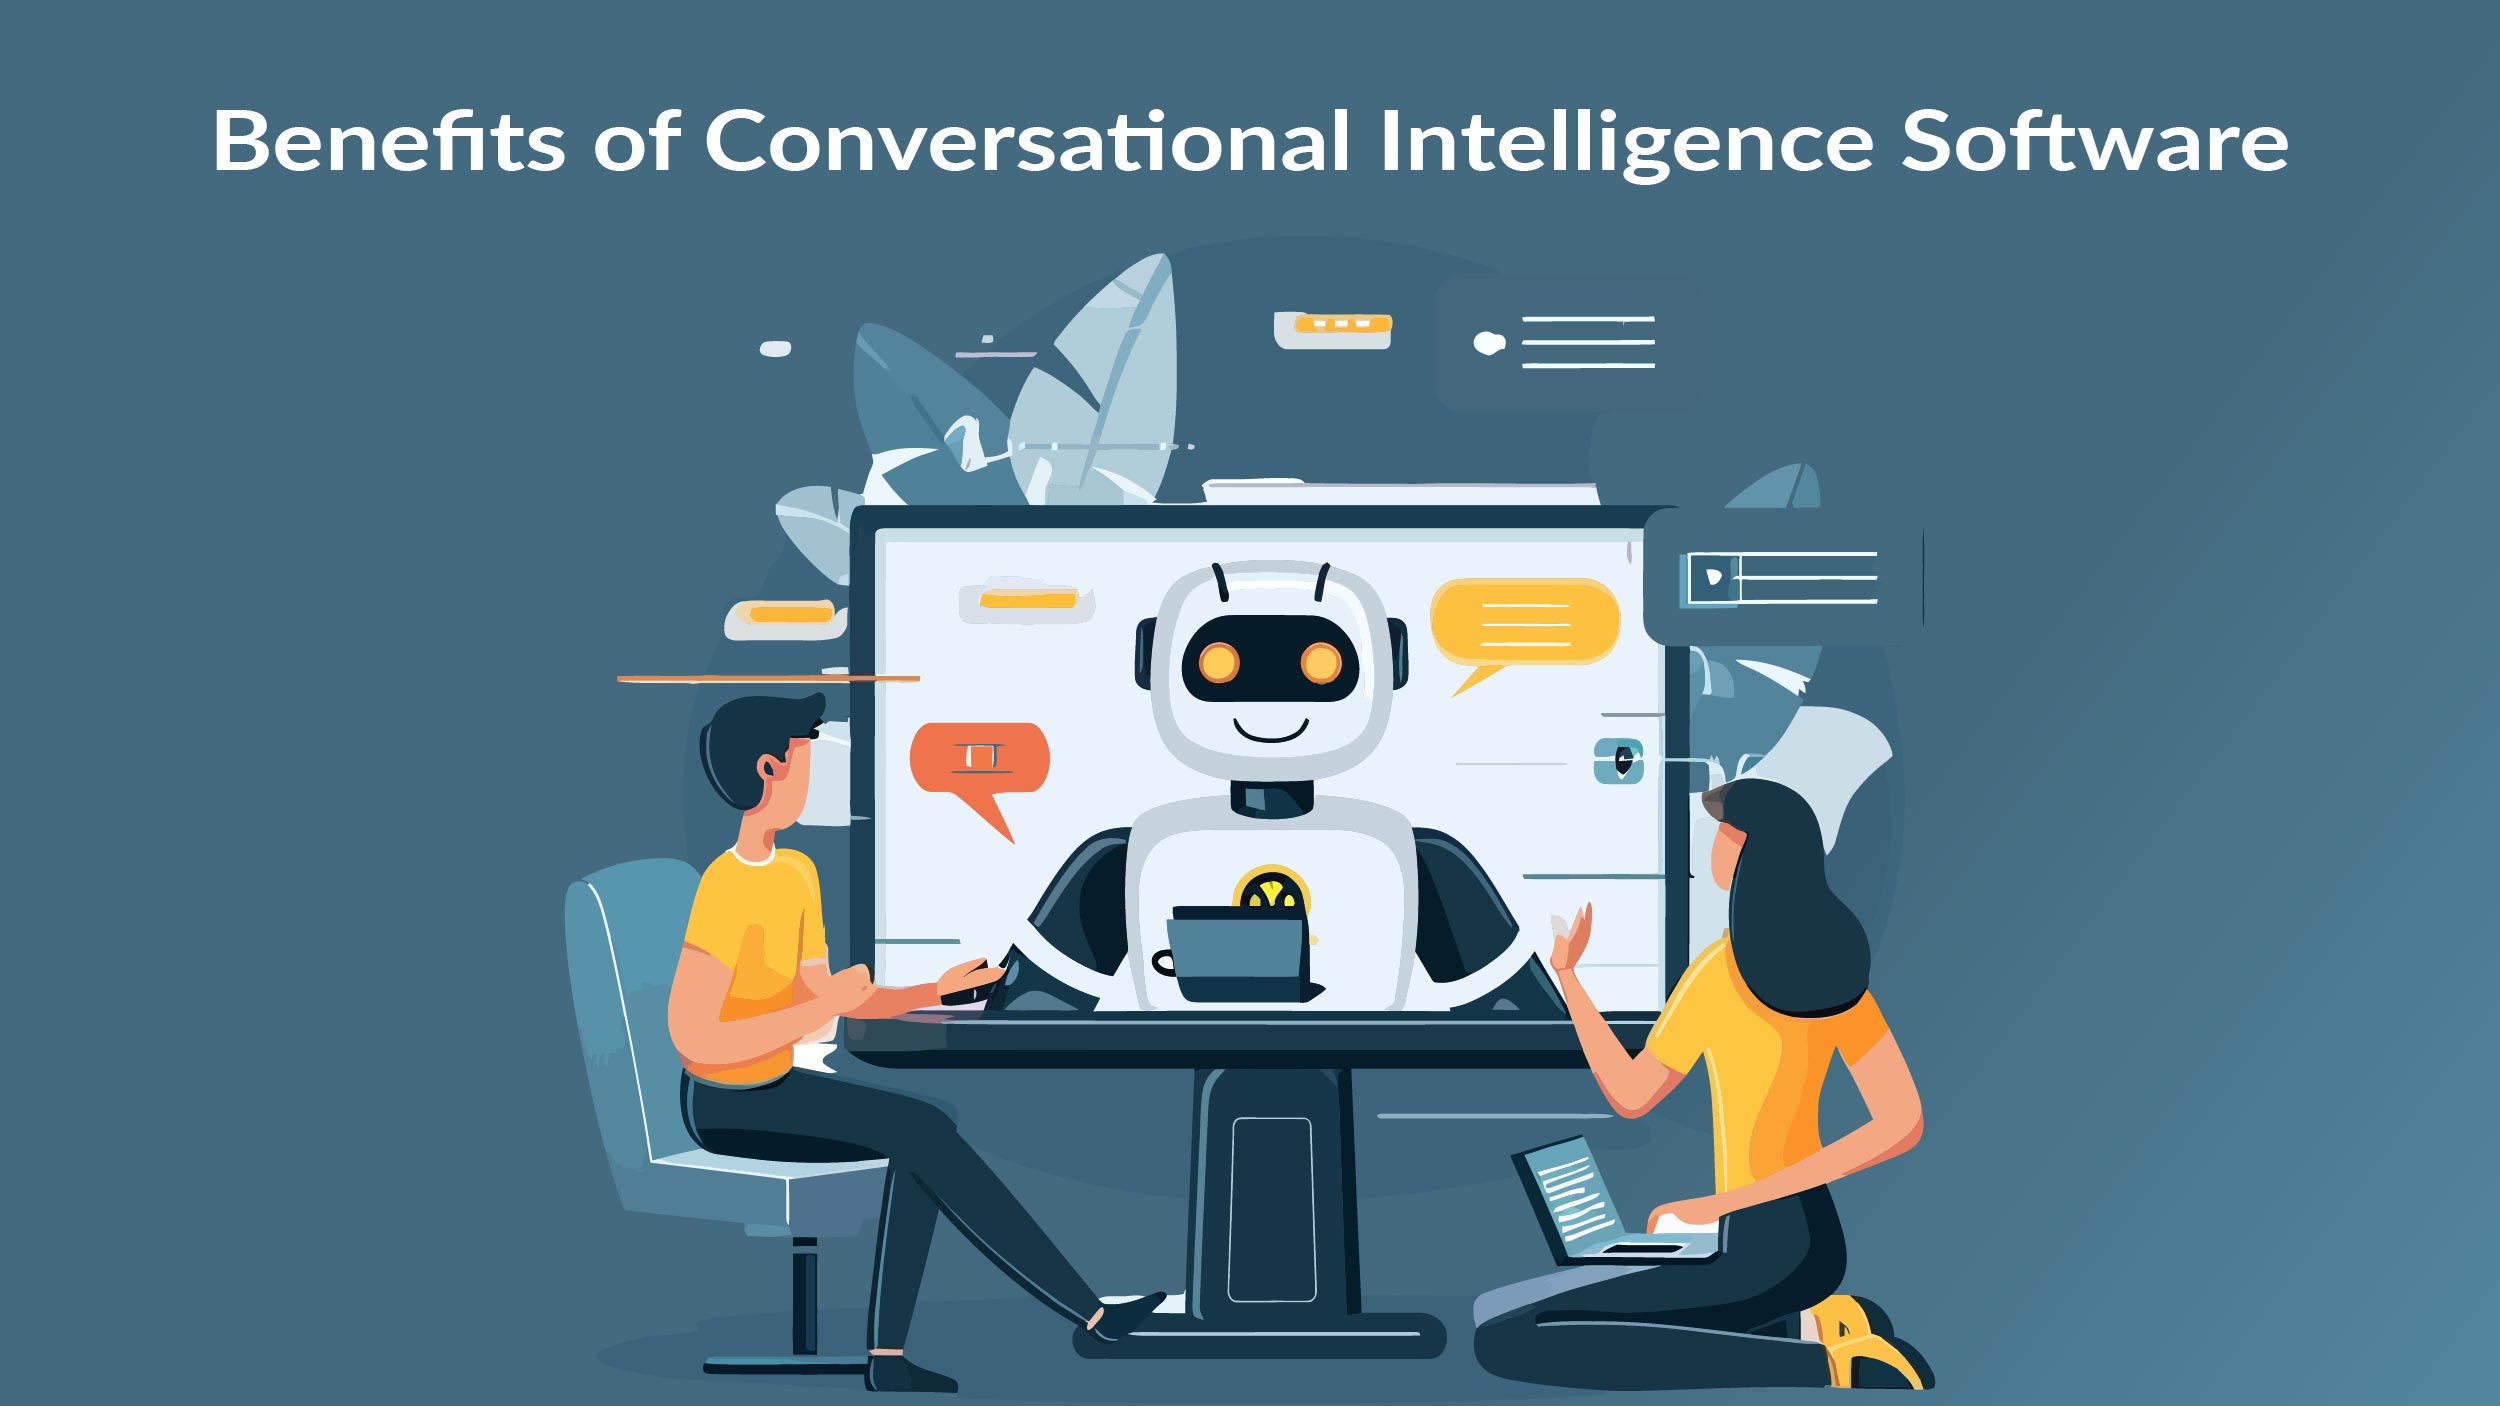 Conversational Intelligence Software